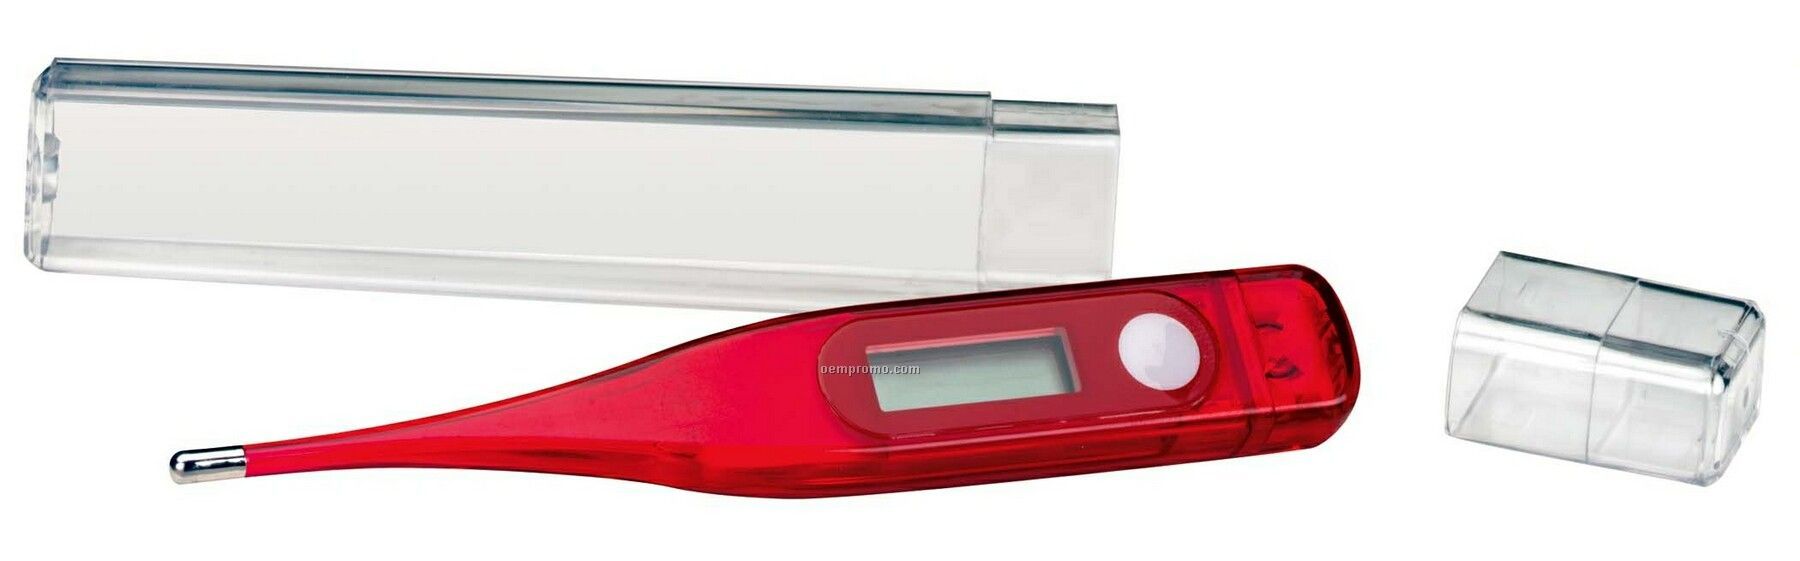 Pillowline Translucent Digital Thermometer